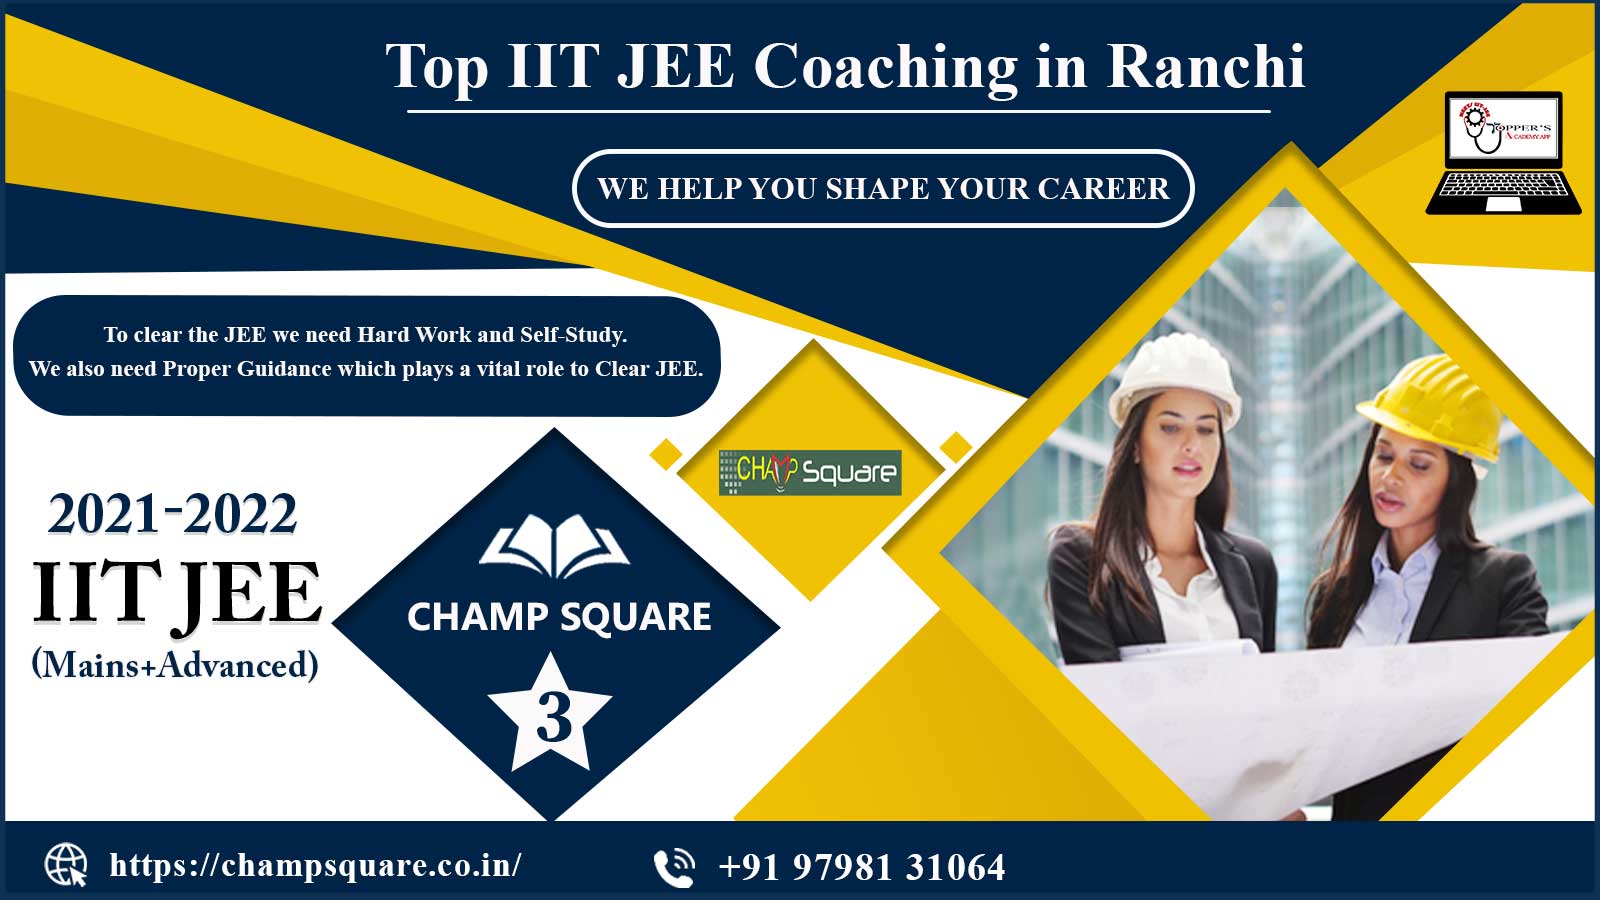 Champ Square IIT JEE Coaching in Ranchi